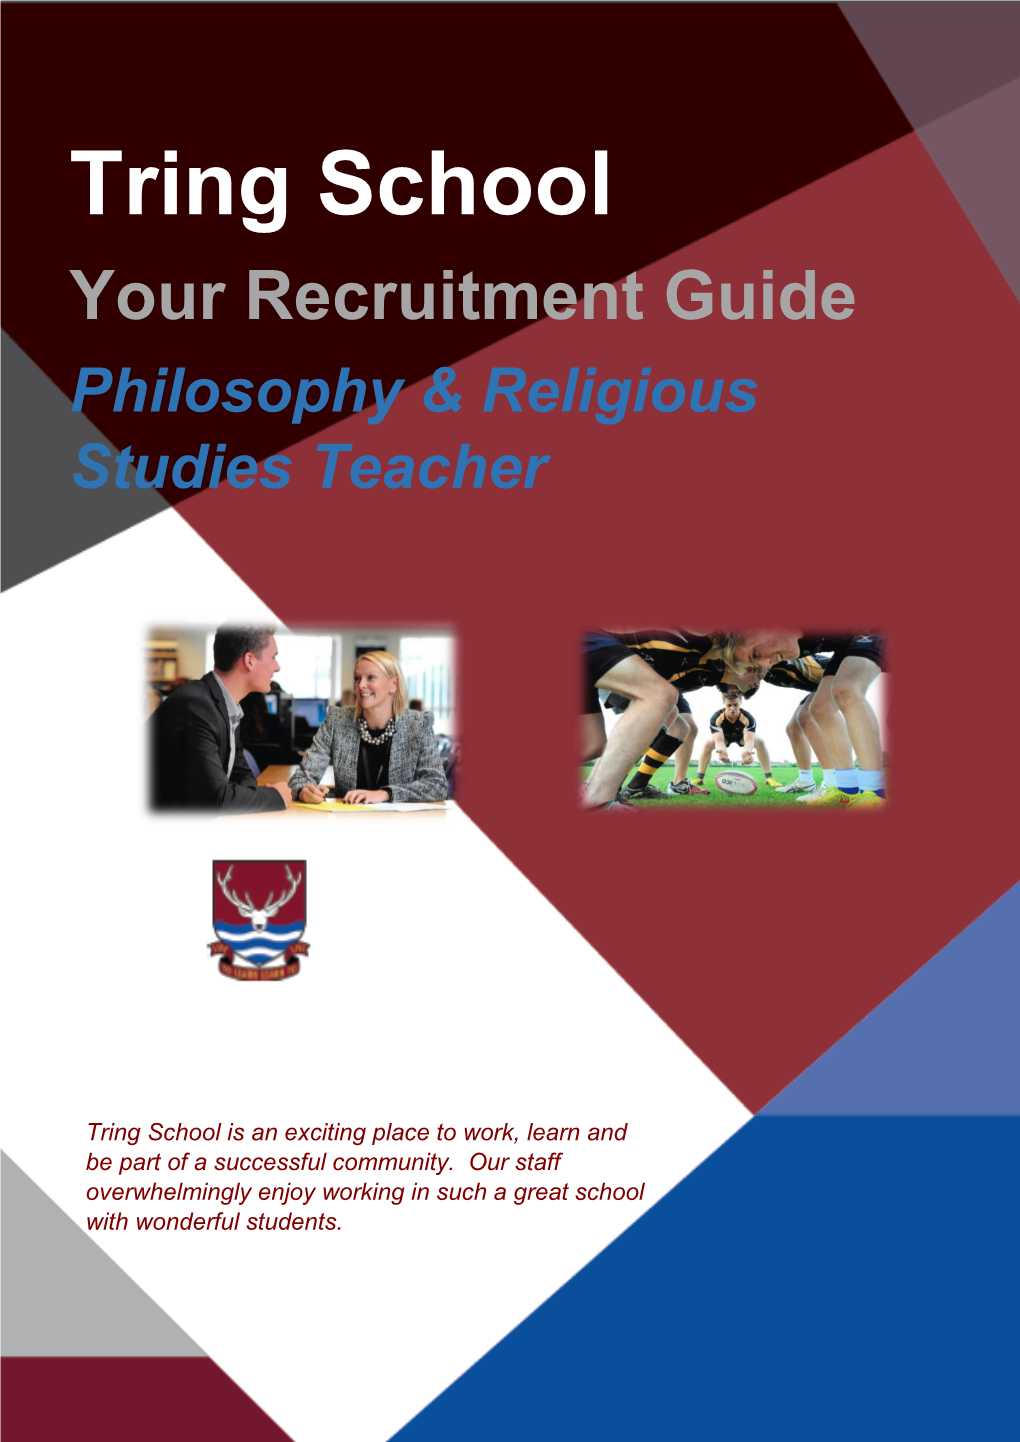 Tring School Your Recruitment Guide Philosophy & Religious Studies Teacher